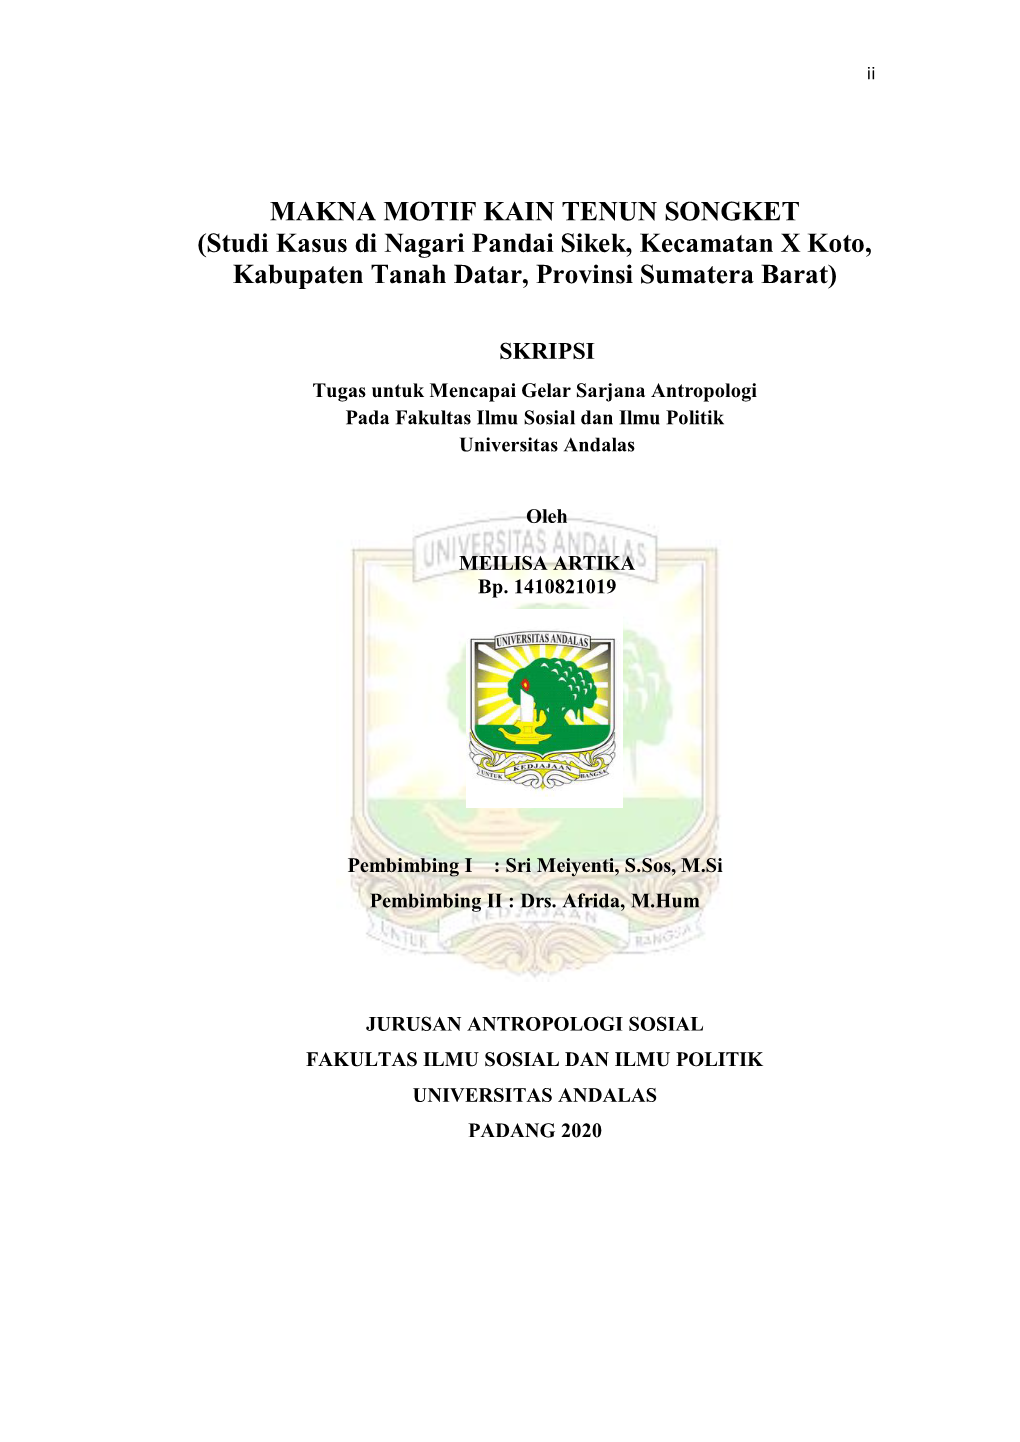 MAKNA MOTIF KAIN TENUN SONGKET (Studi Kasus Di Nagari Pandai Sikek, Kecamatan X Koto, Kabupaten Tanah Datar, Provinsi Sumatera Barat)